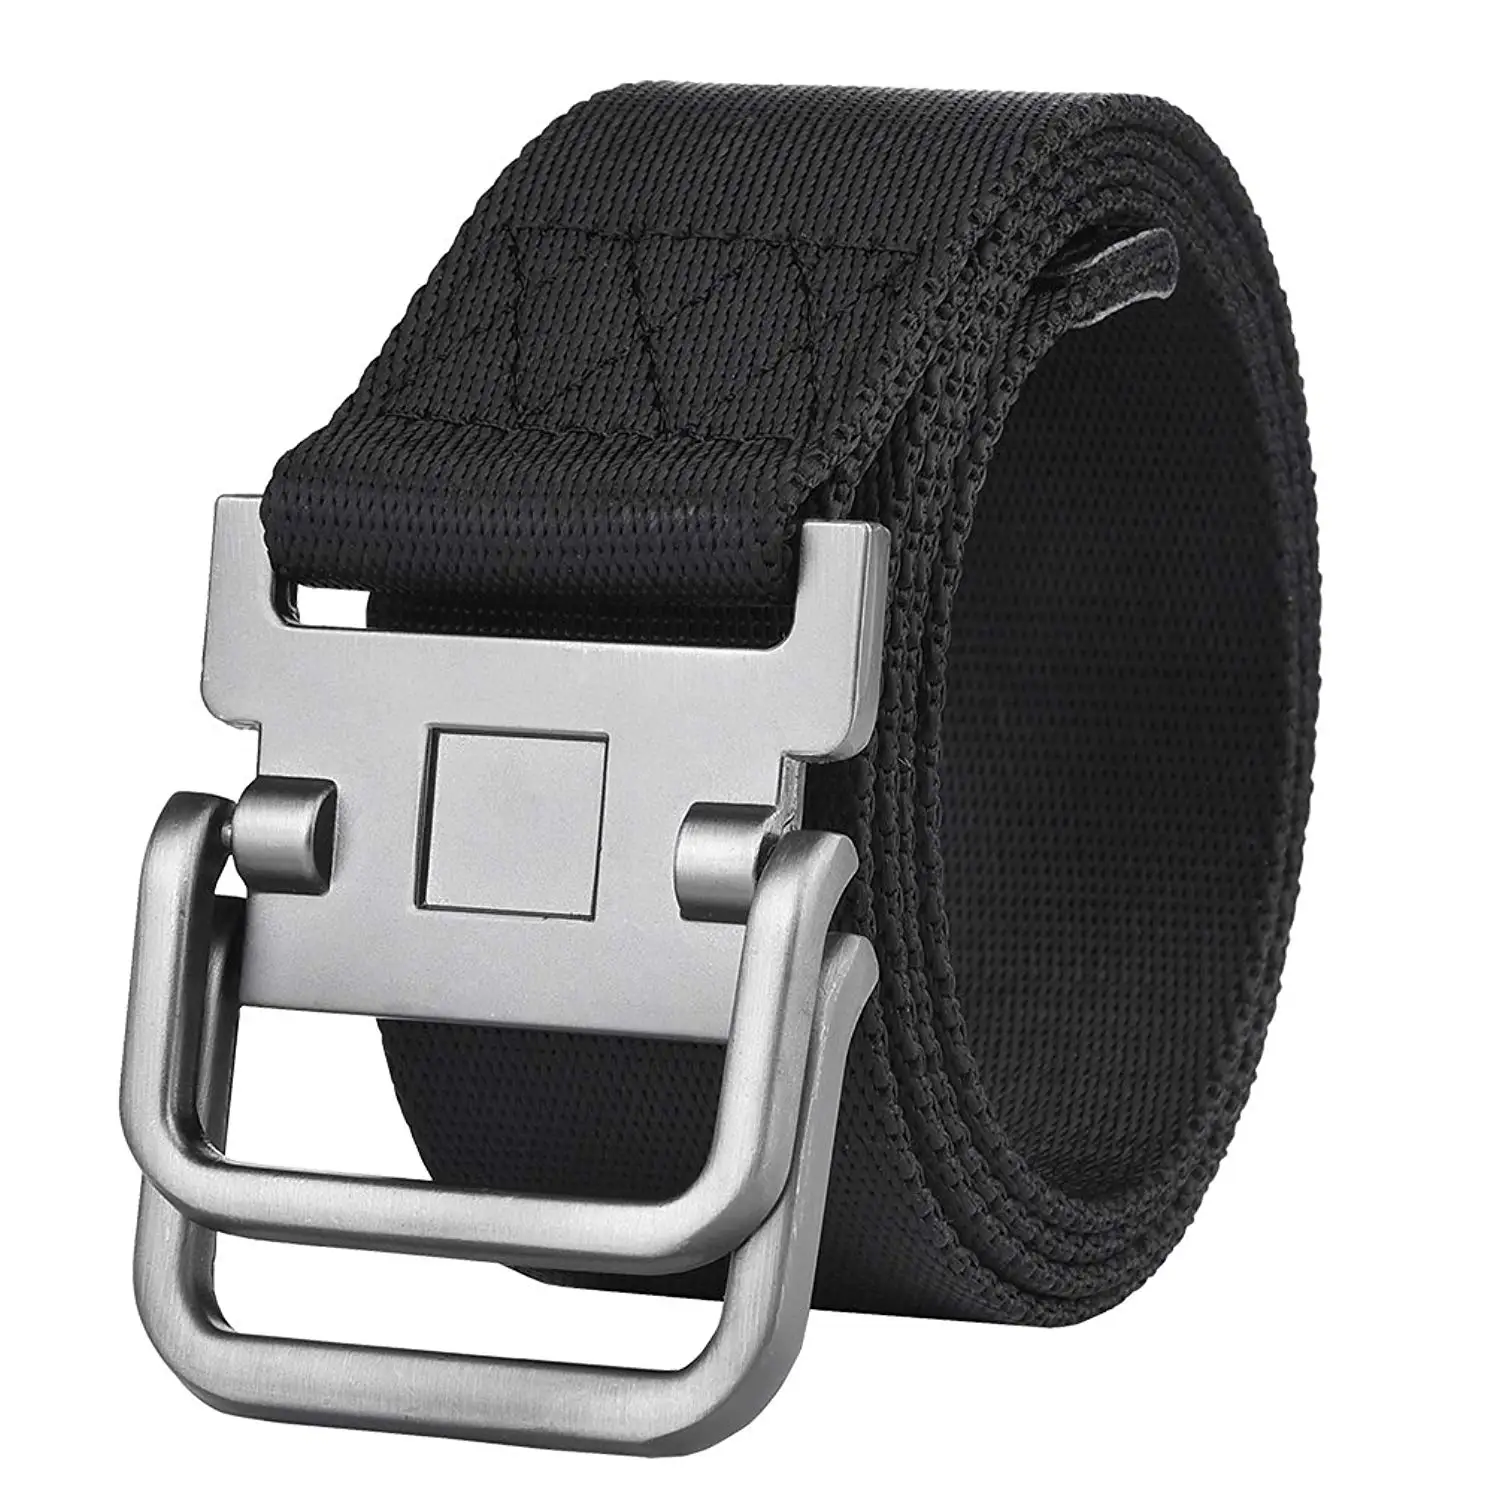 8BEES GIFT Men Nylon Military Belt Tactical Web Waist Belt Adjustable Waistband with Plastic Buckle